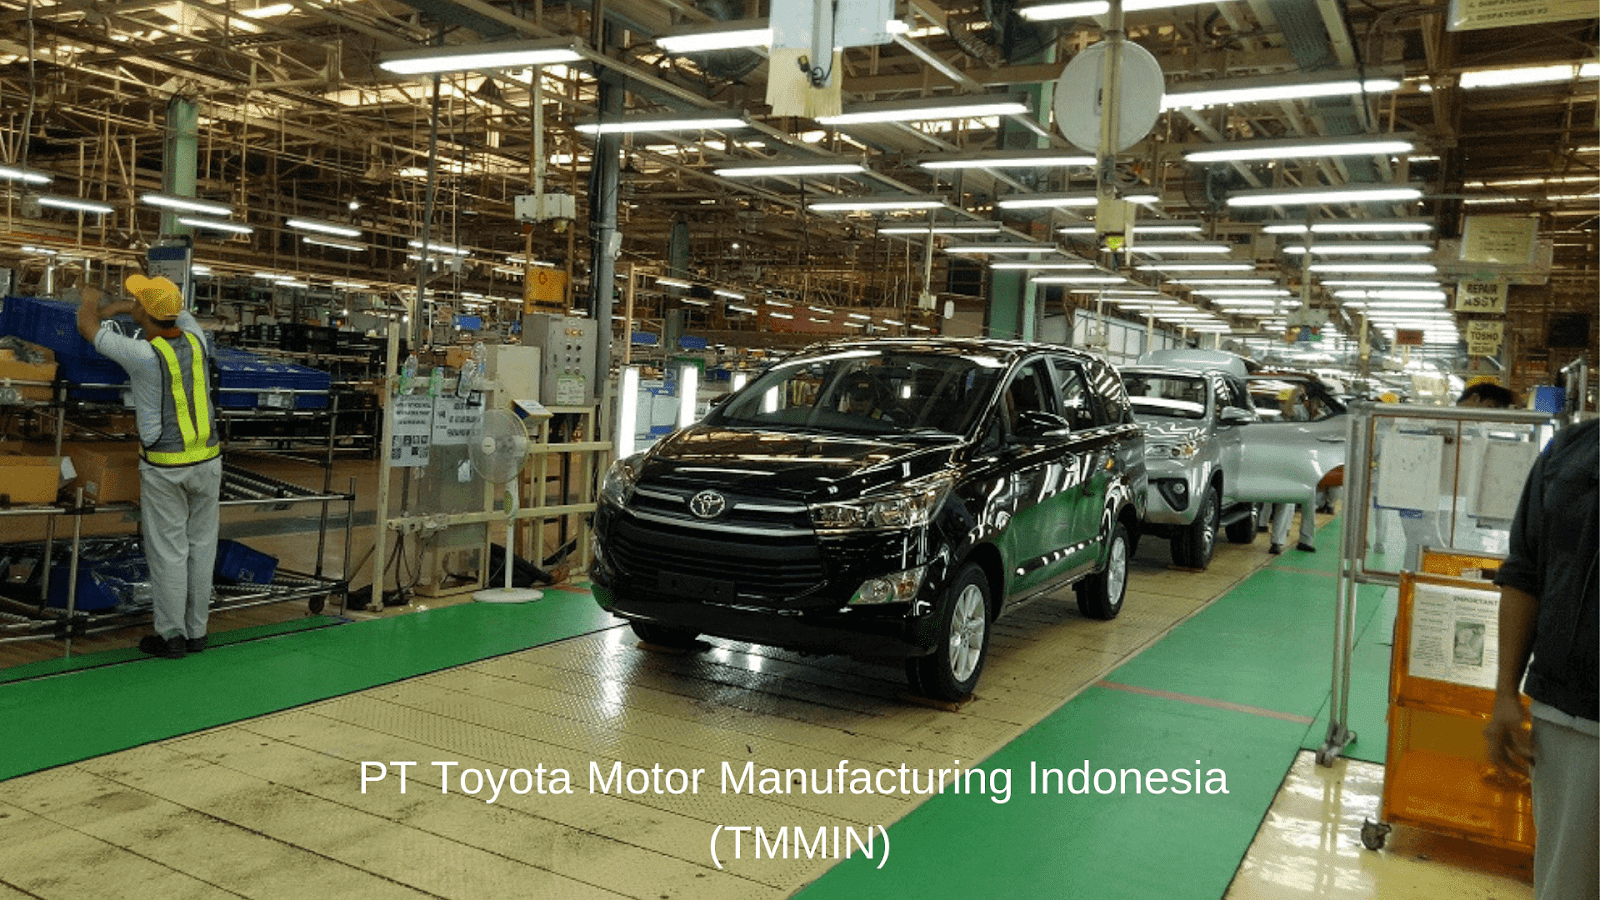 Lowongan Kerja Pt Toyota Motor Manufacturing Indonesia Tmmin Terbaru 2021